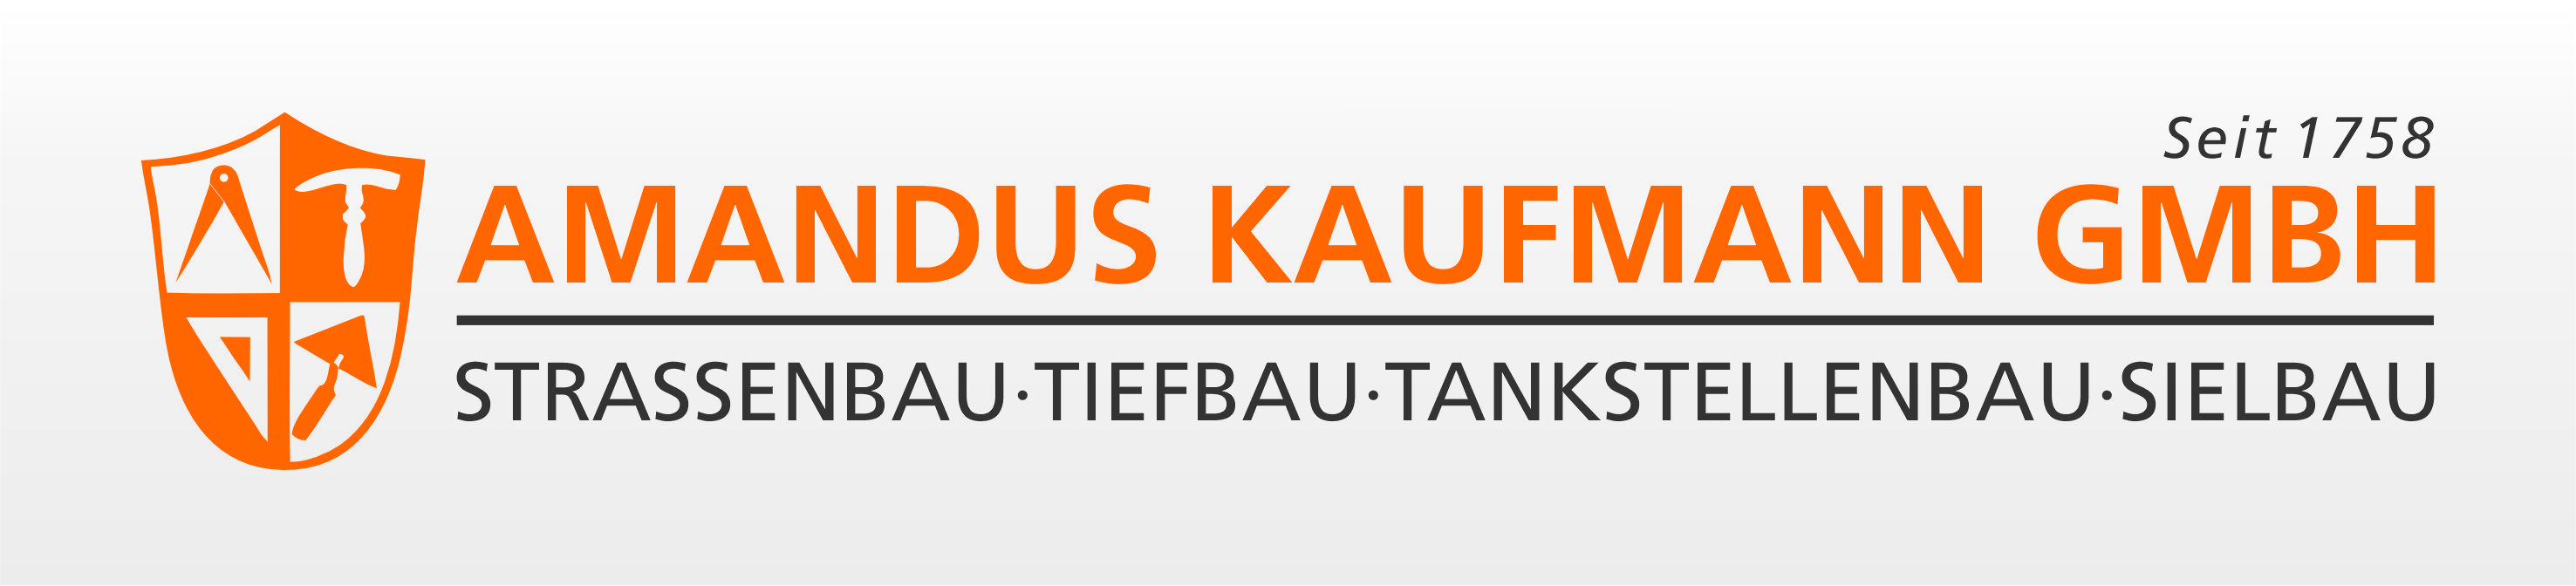 Amandus Kaufmann GmbH